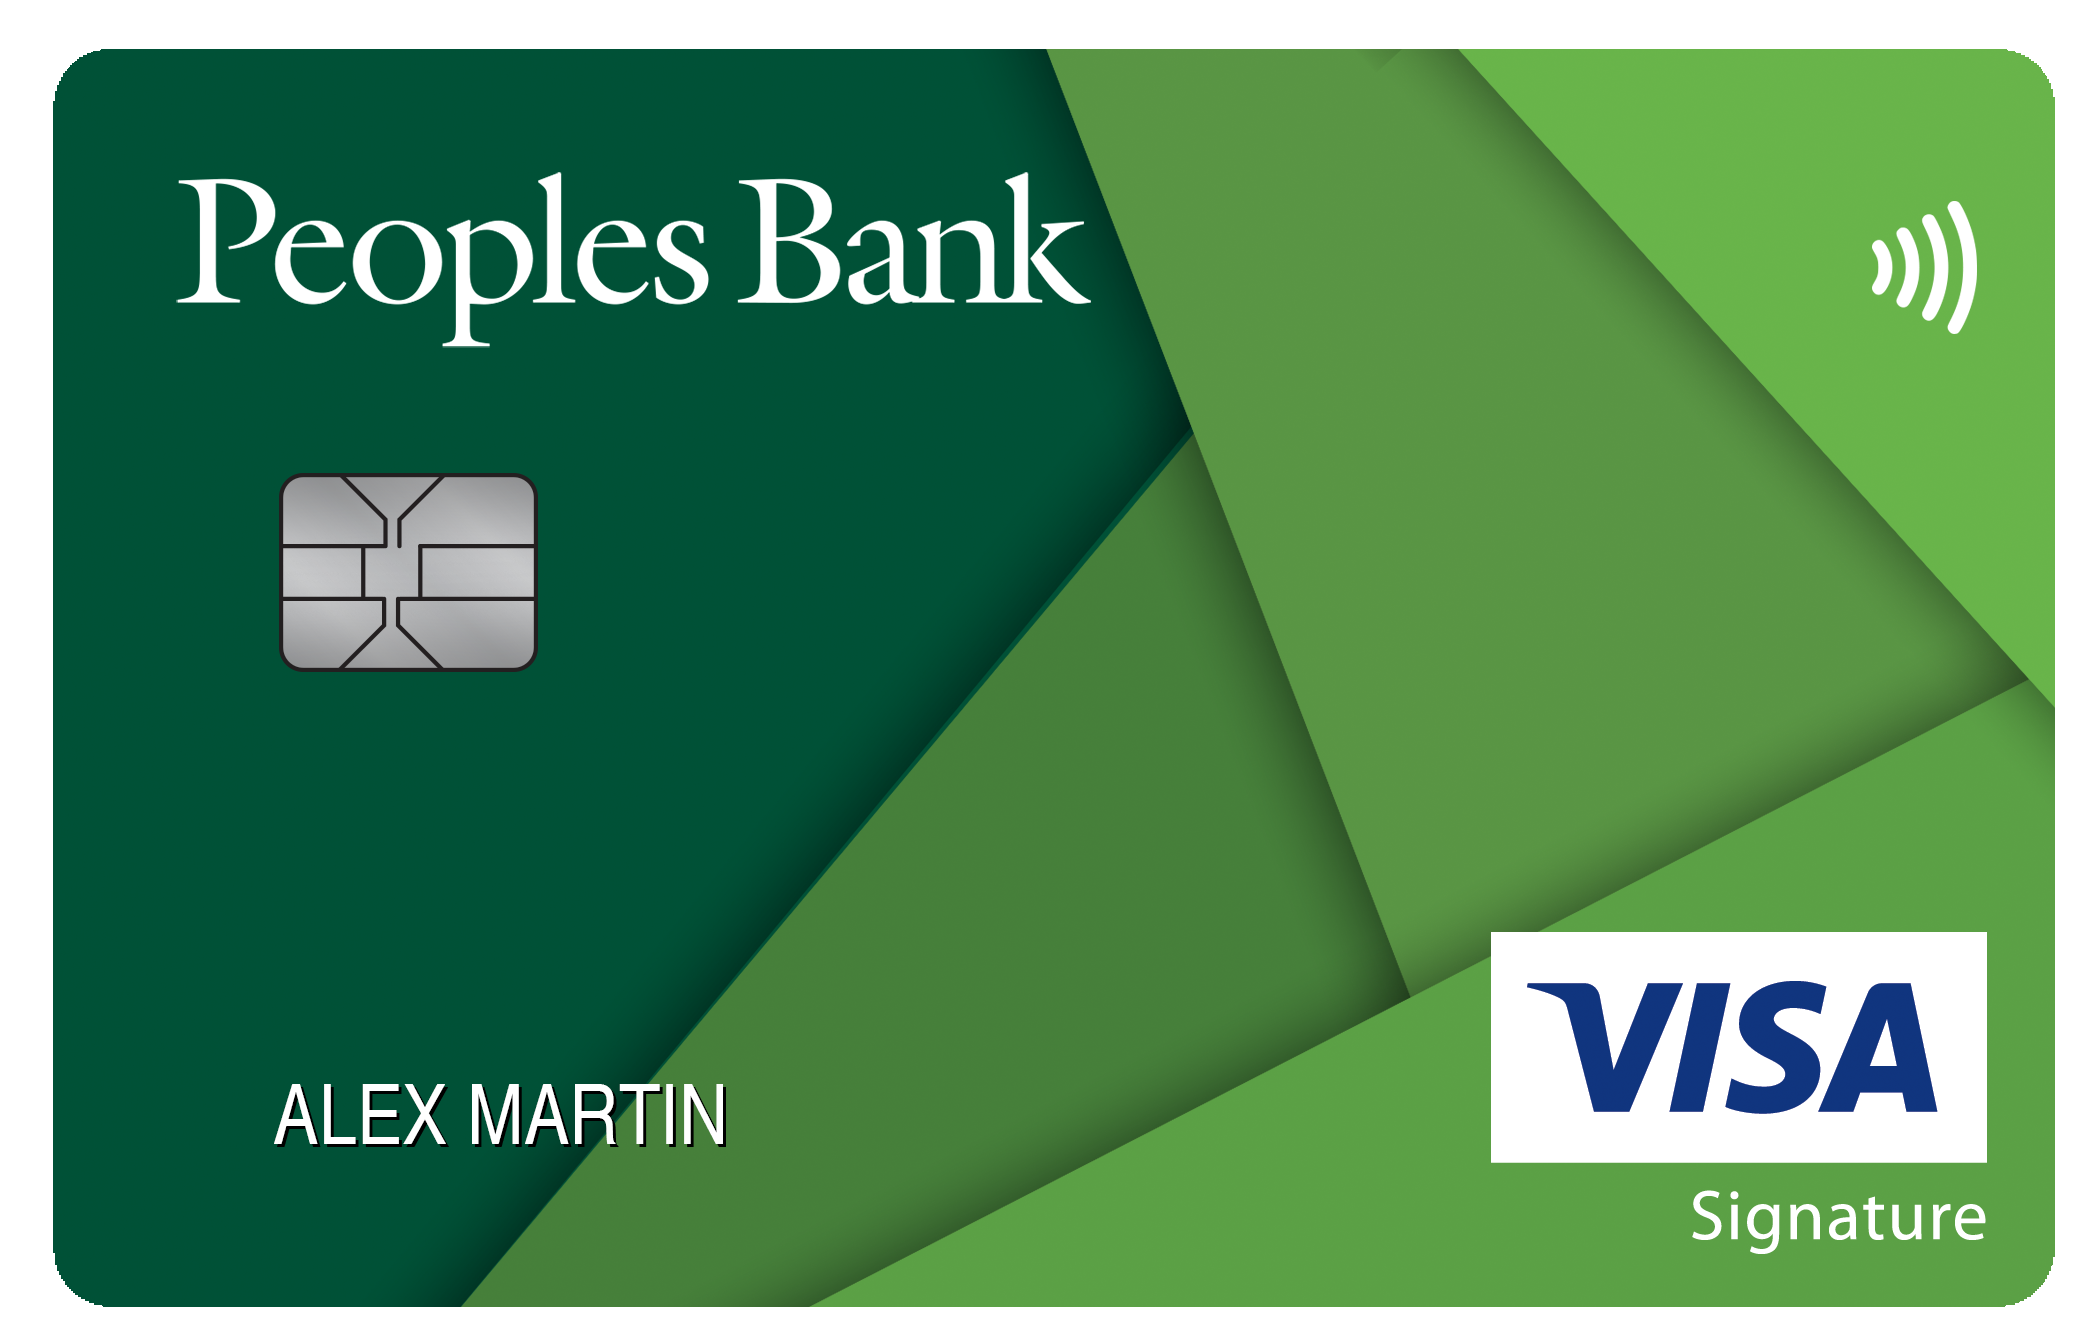 Peoples Bank Travel Rewards+ Card